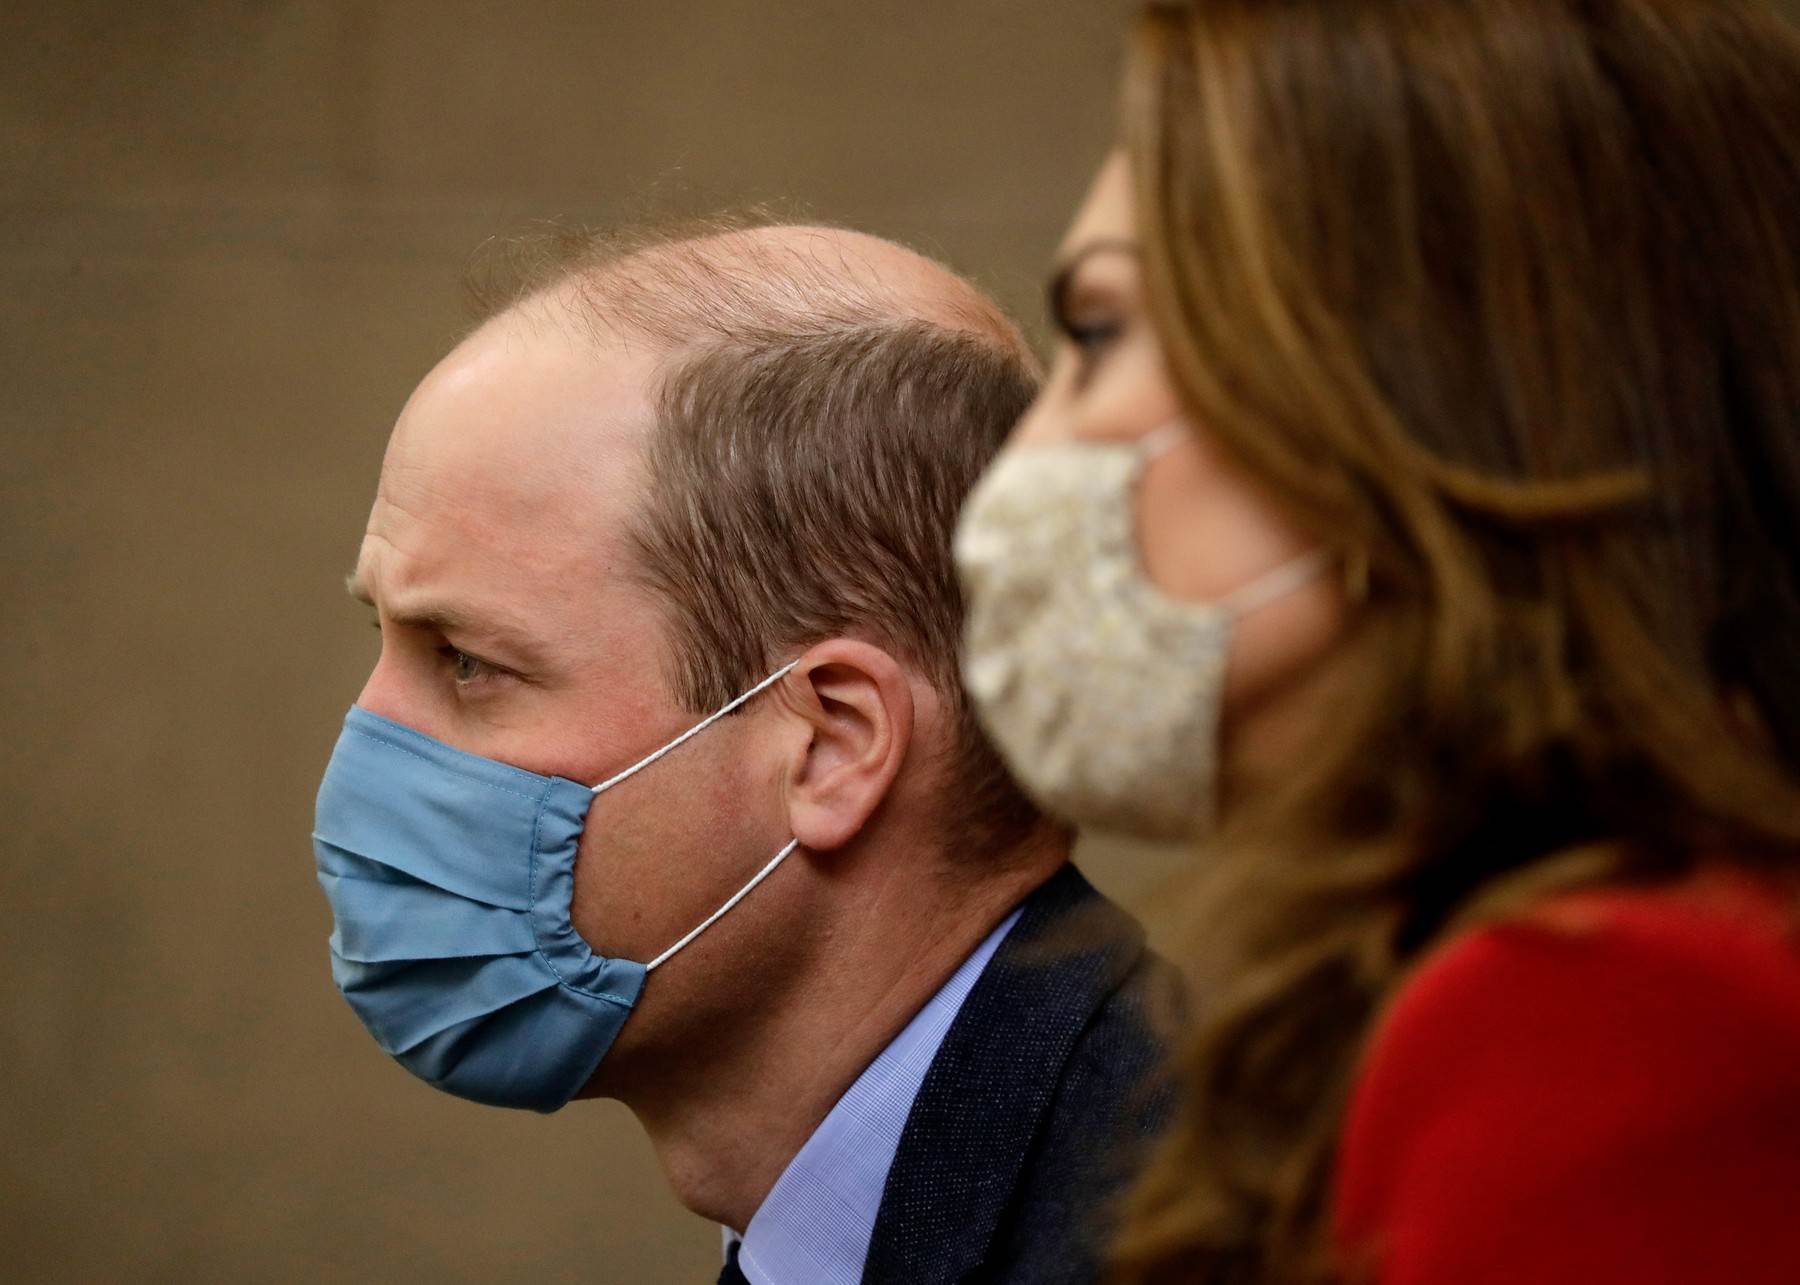 'BILO JE OZBILJNO' Princ William skrivao da je zaražen koronavirusom